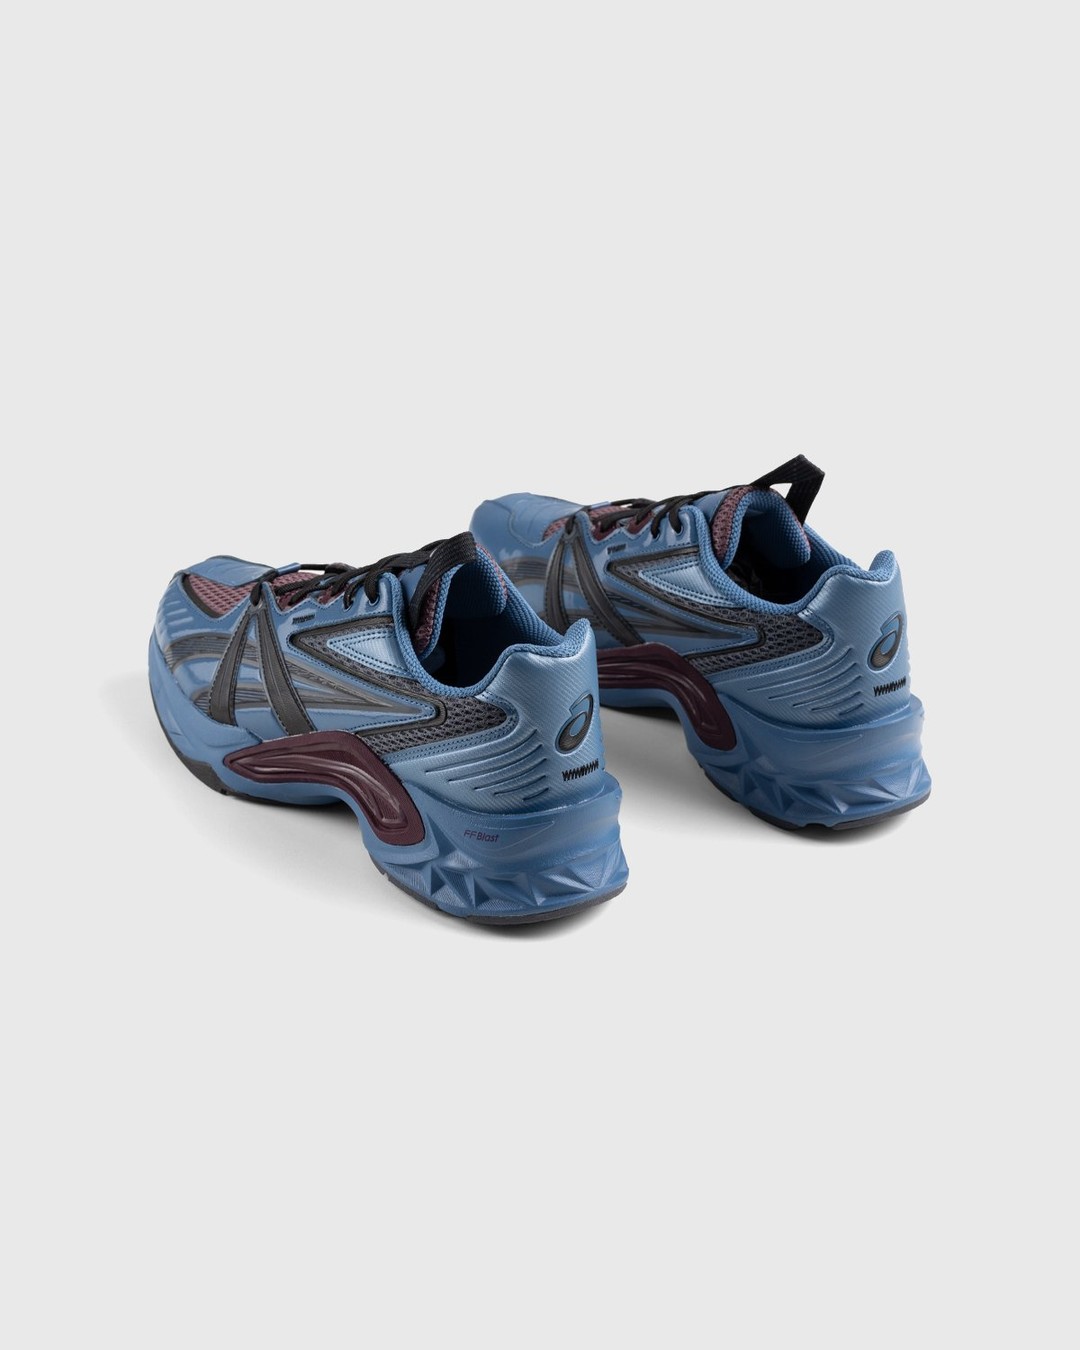 asics – HN2-S Protoblast Azure/Black - Low Top Sneakers - Blue - Image 5